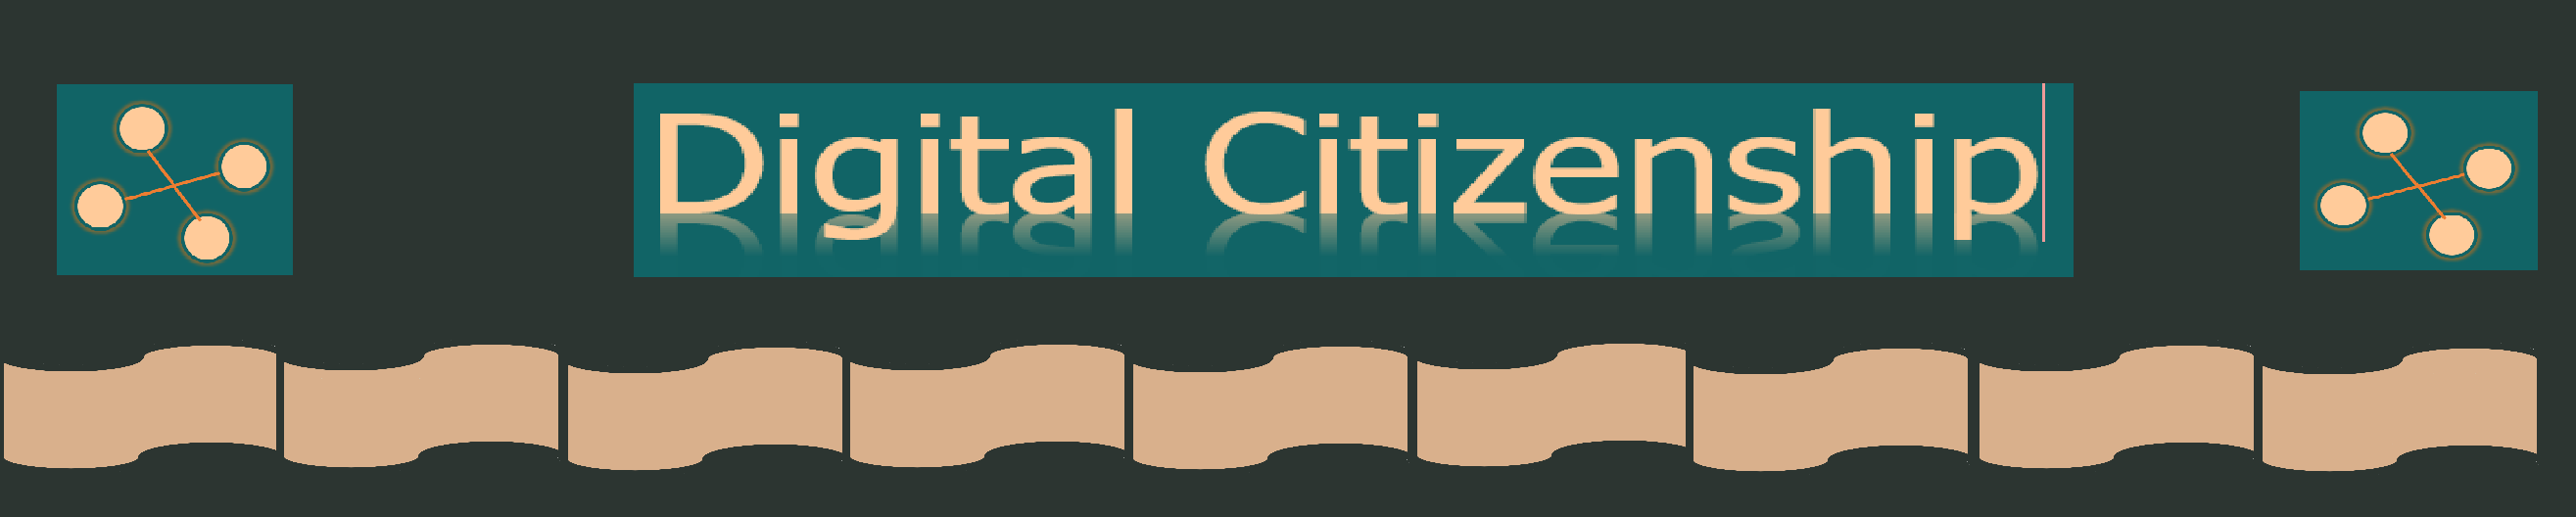 Homepage: Digital Citizenship